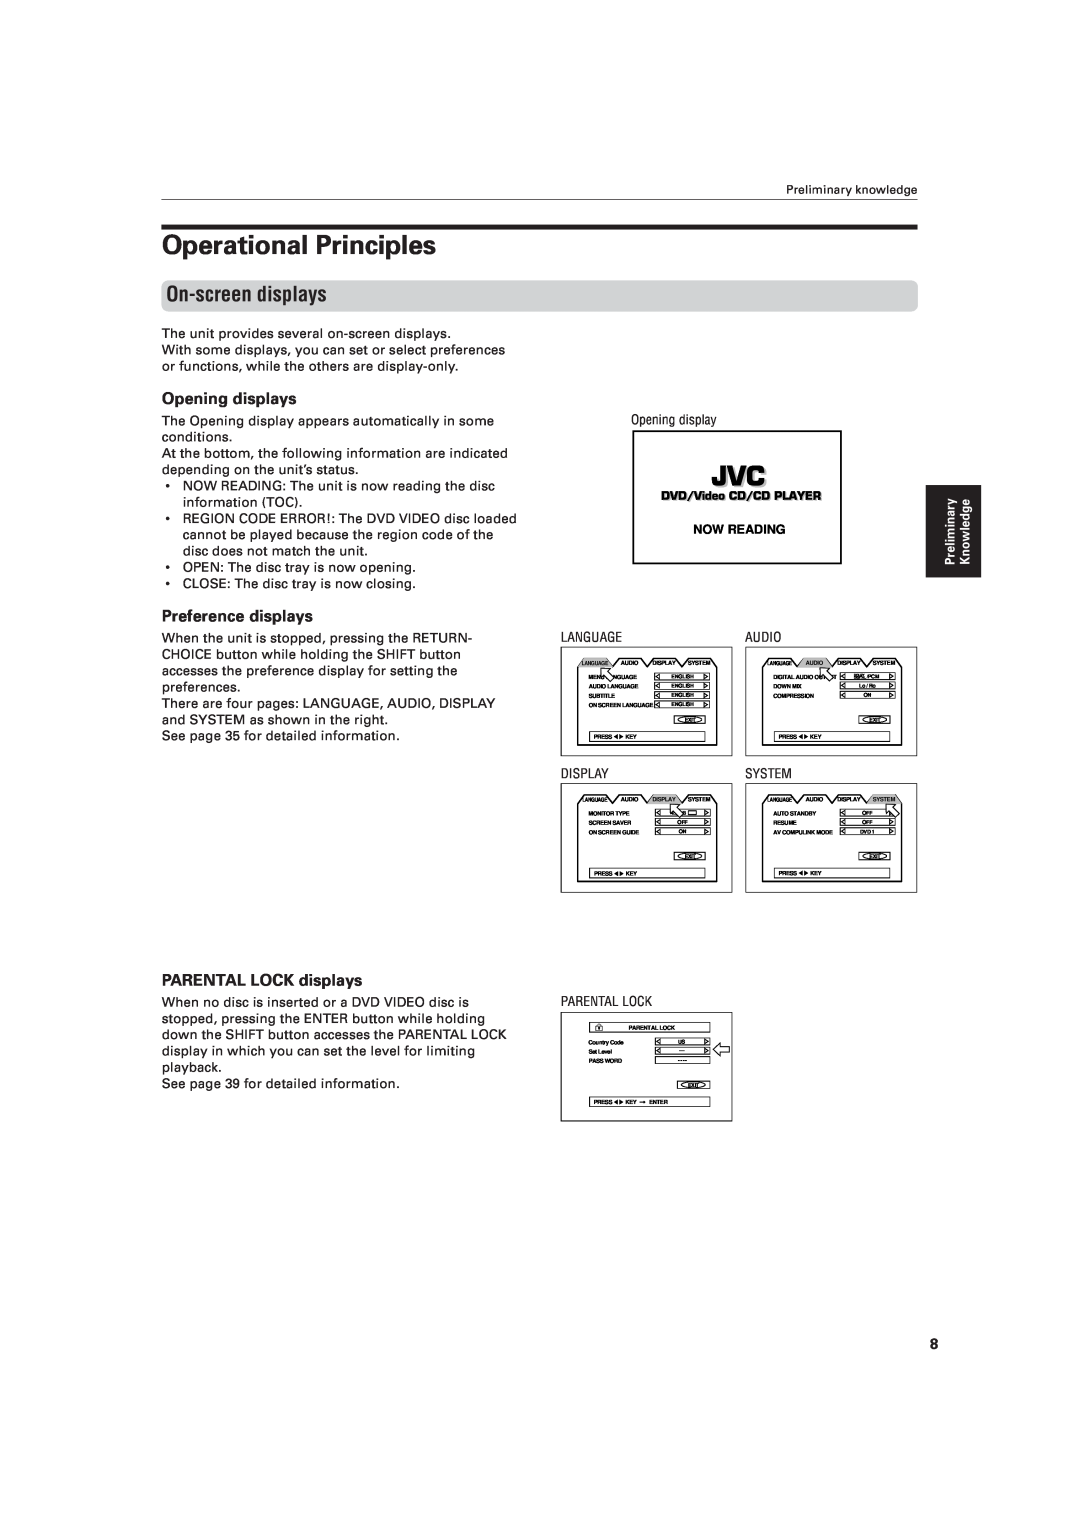 JVC XV-521BK manual Operational Principles, On-screen displays, Language, Display, Audio, System 